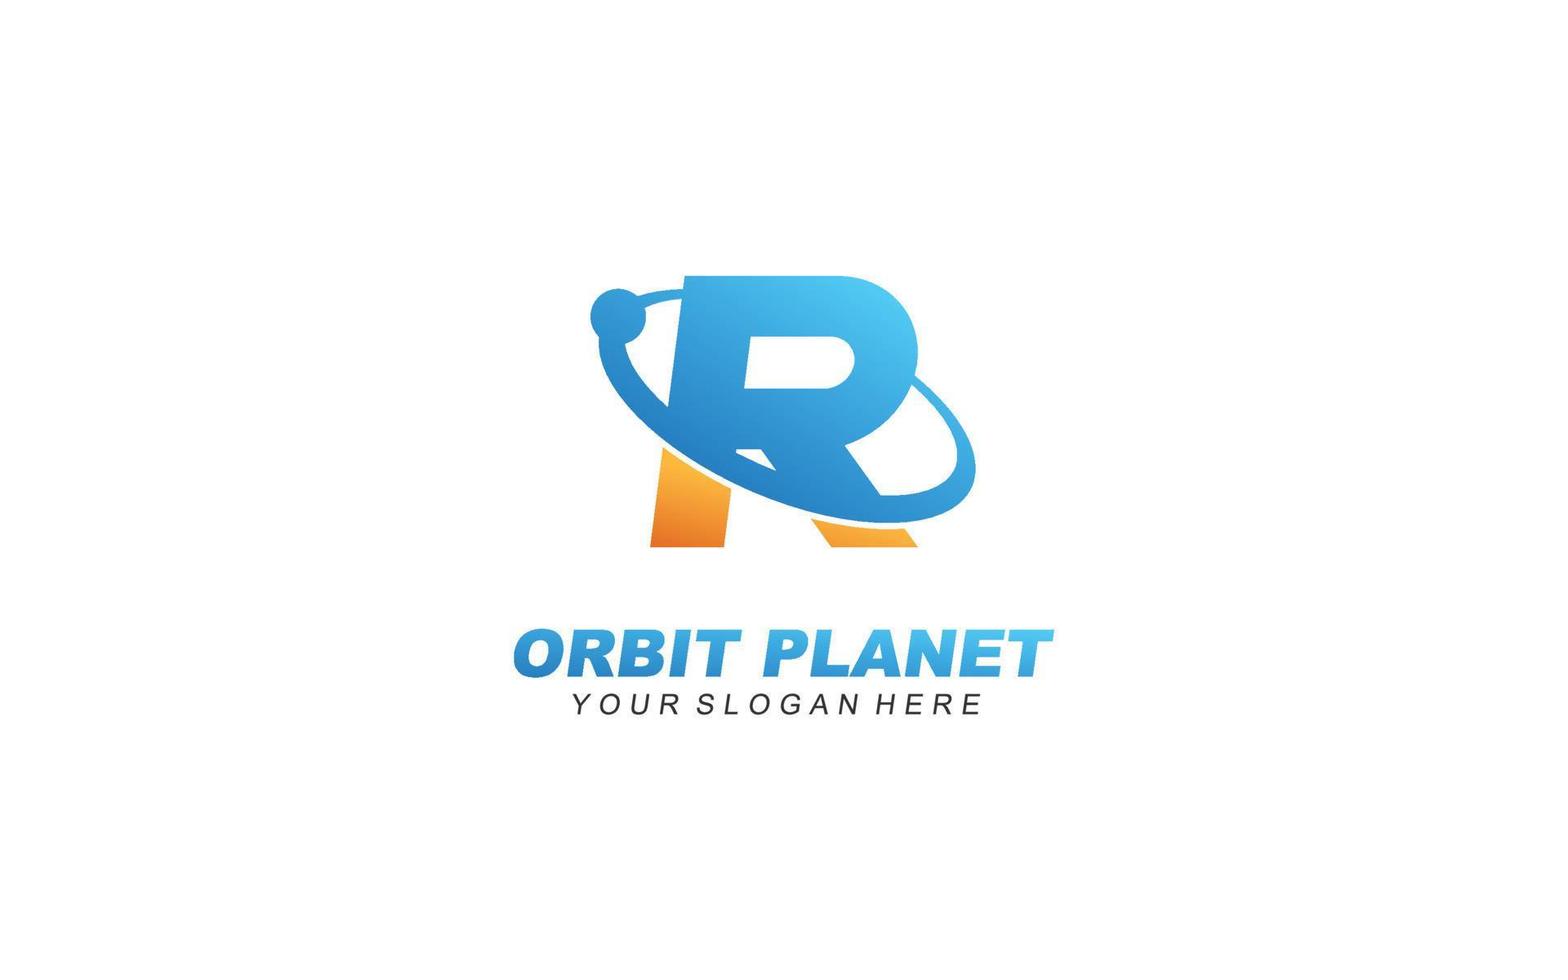 R planet logo design inspiration. Vector letter template design for brand.